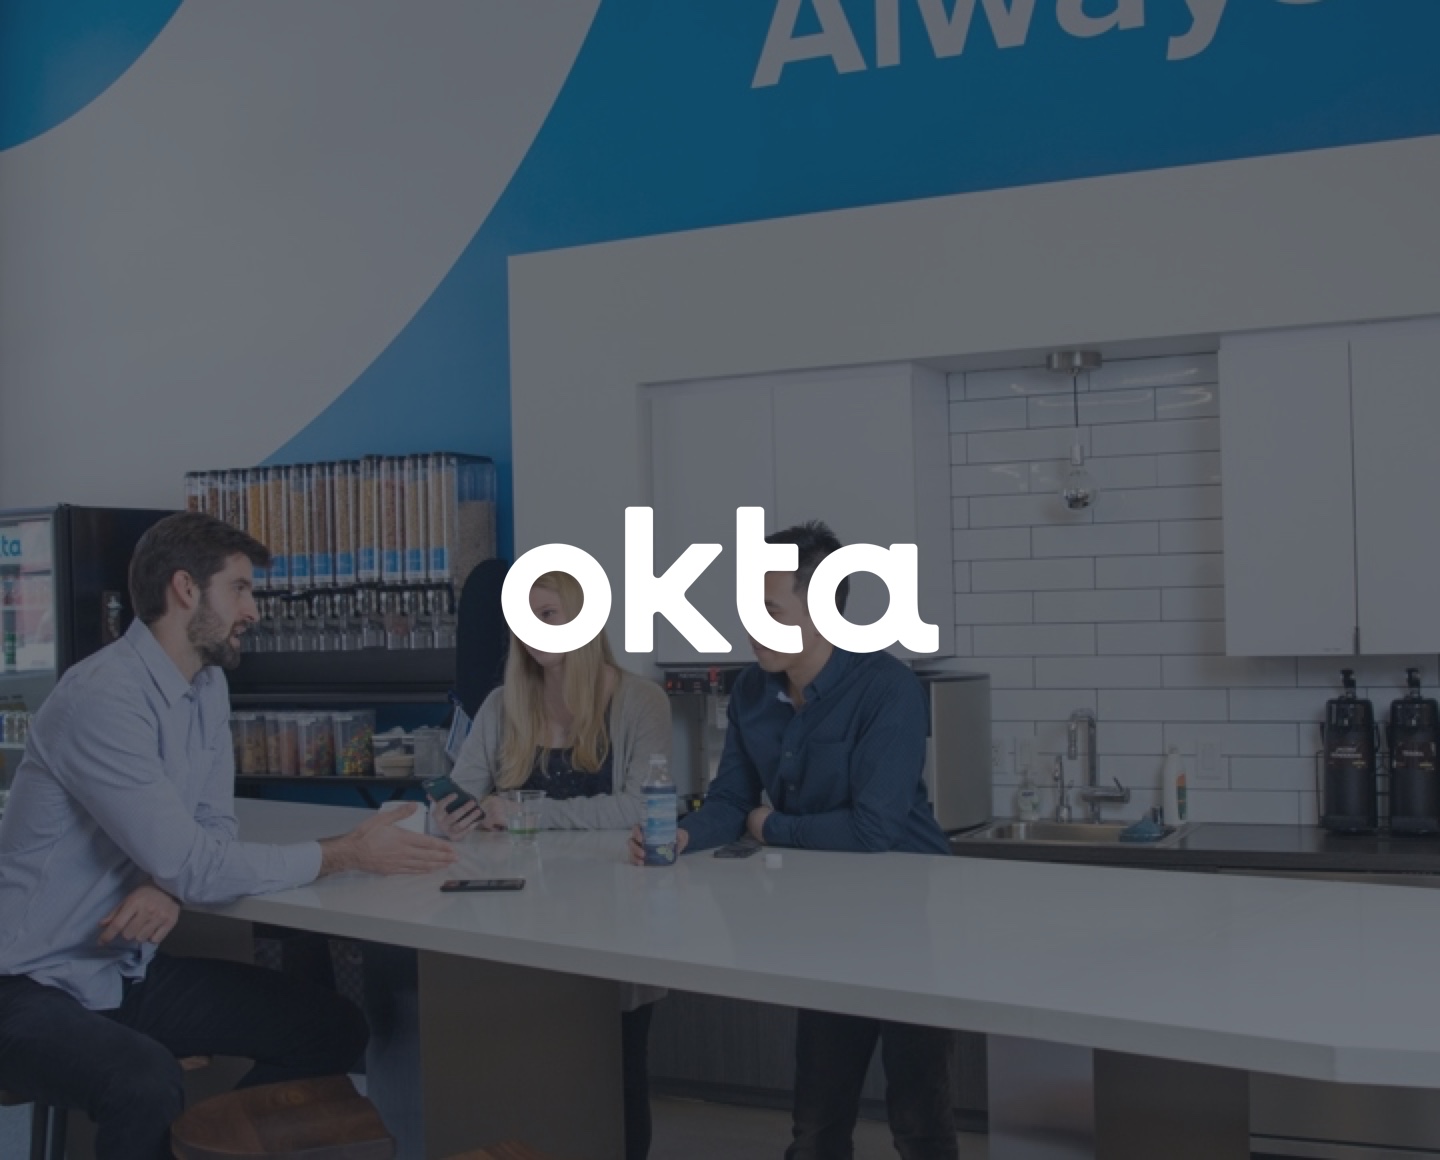 okta_overlay_logo2x